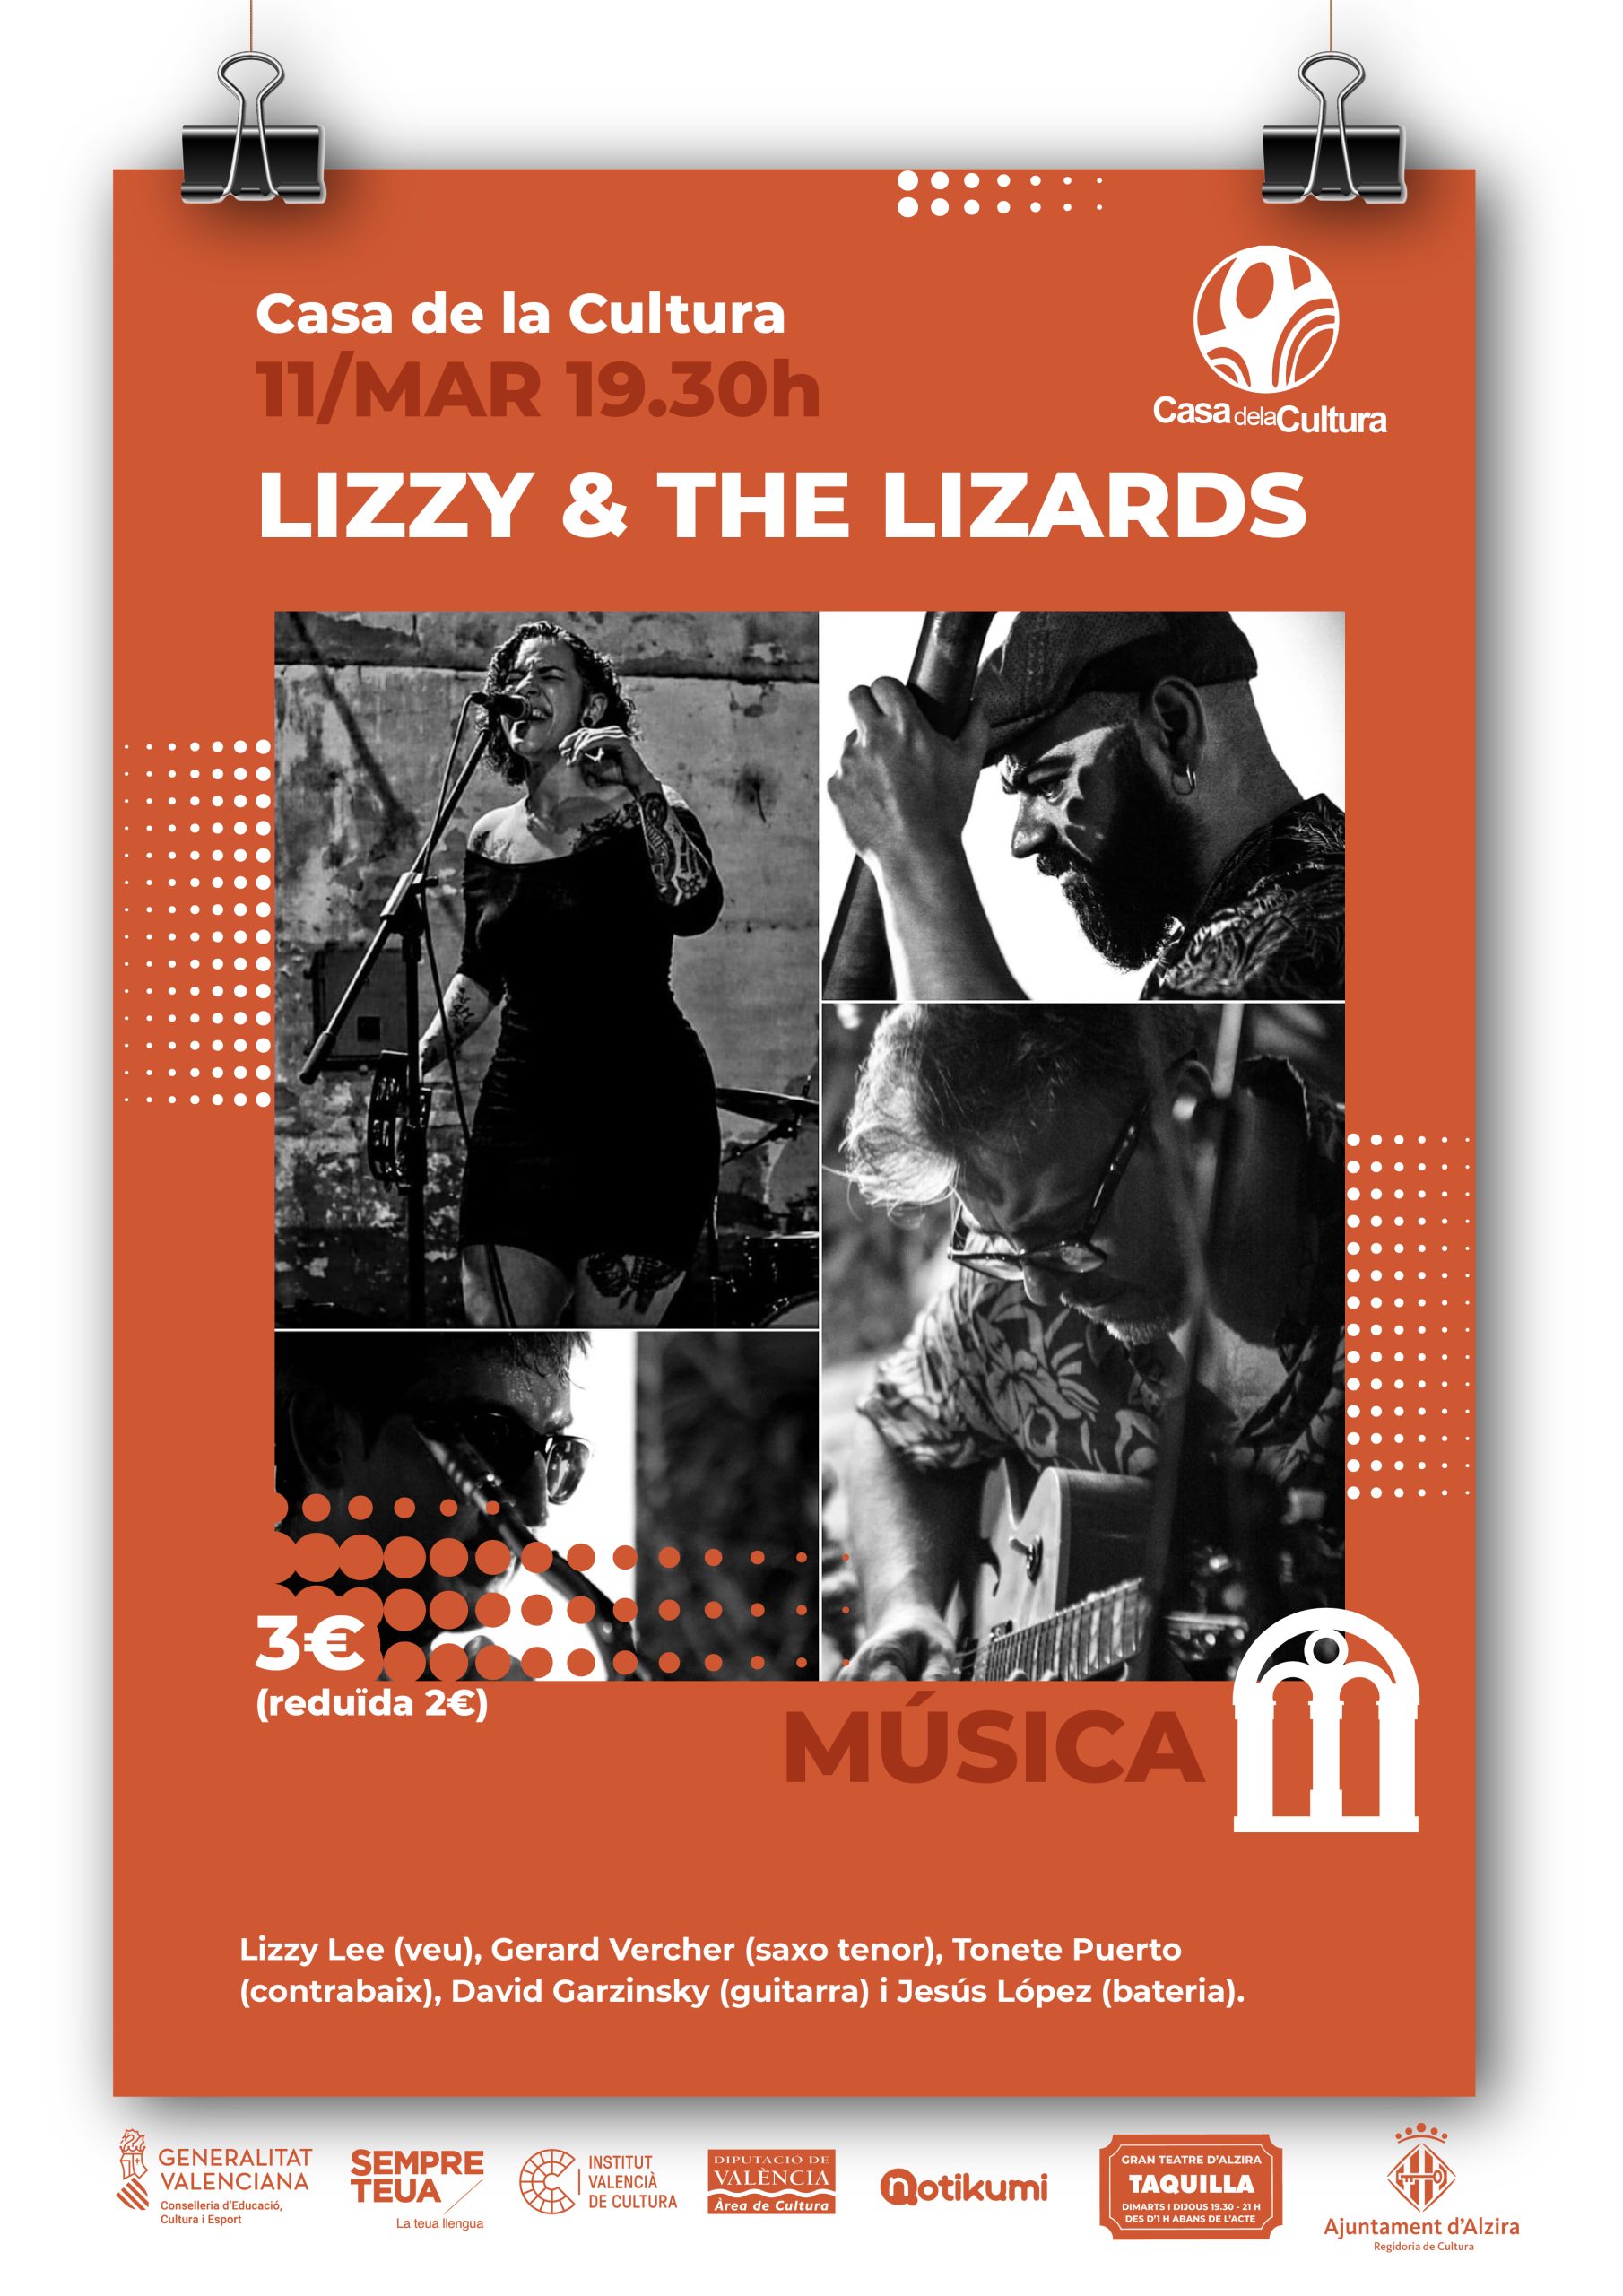 Lizzy & The Lizards